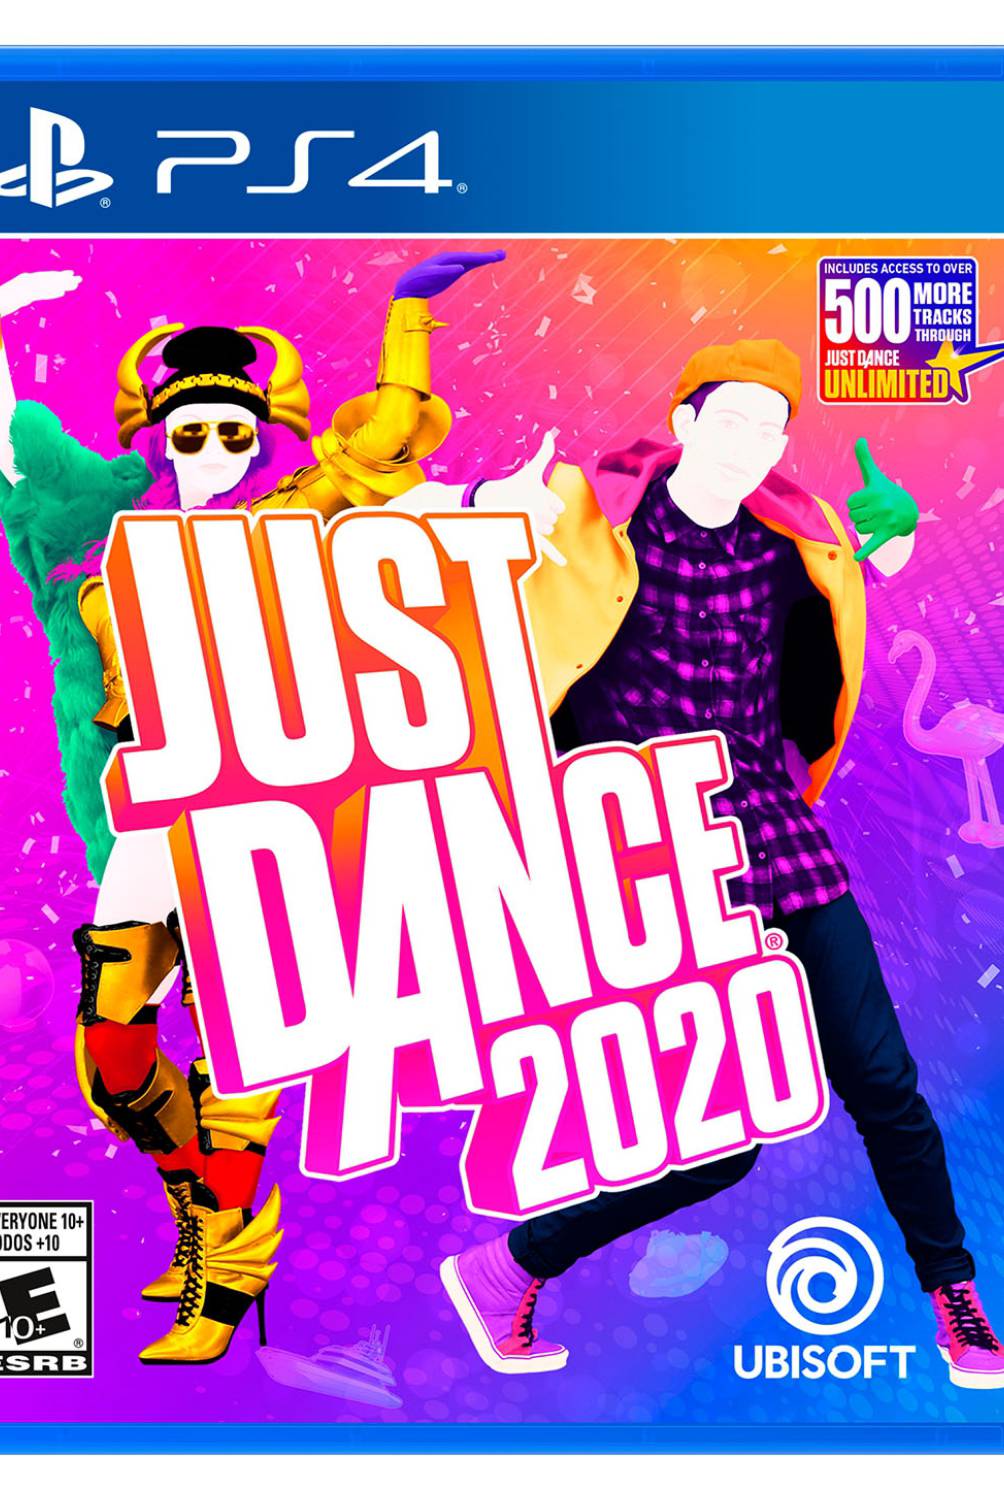 UBISOFT - Just Dance 2020 PS4